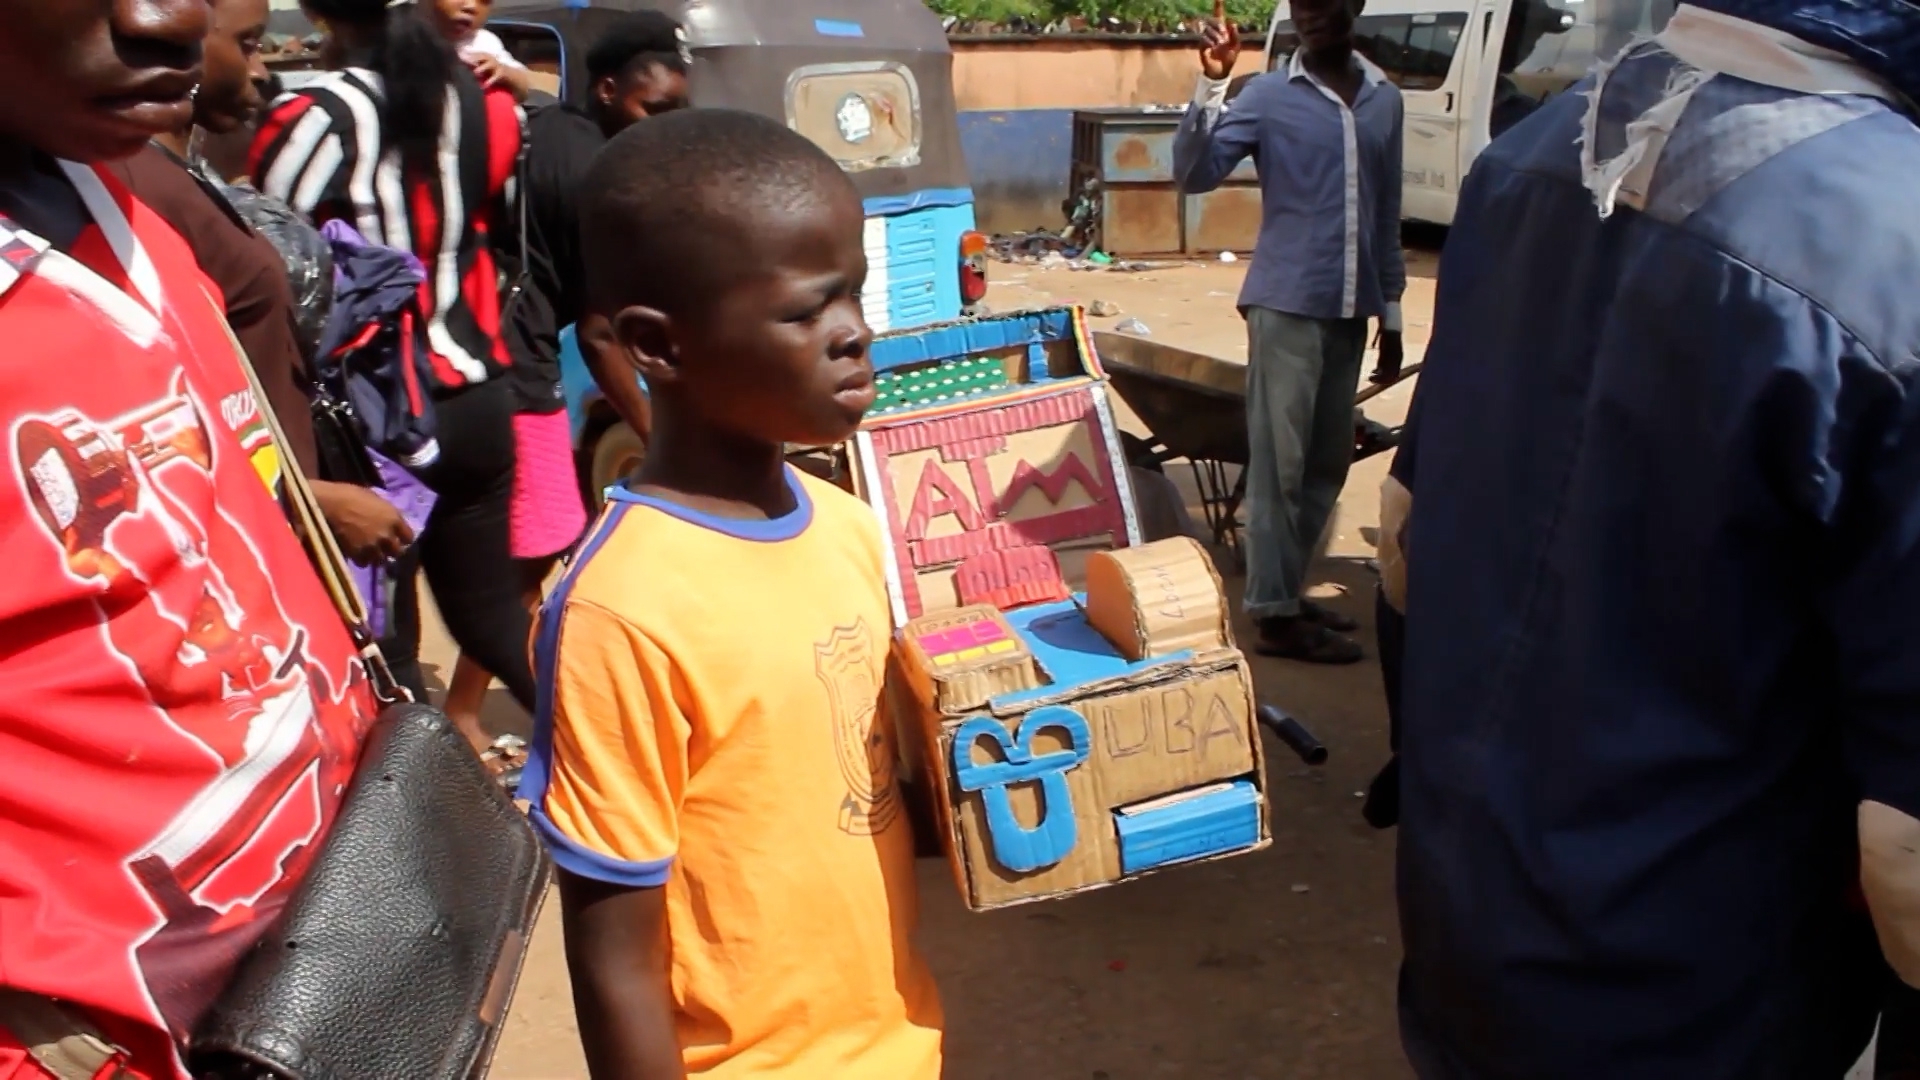 Десятилетний нигериец собрал копию банкомата из картонной коробки Общество